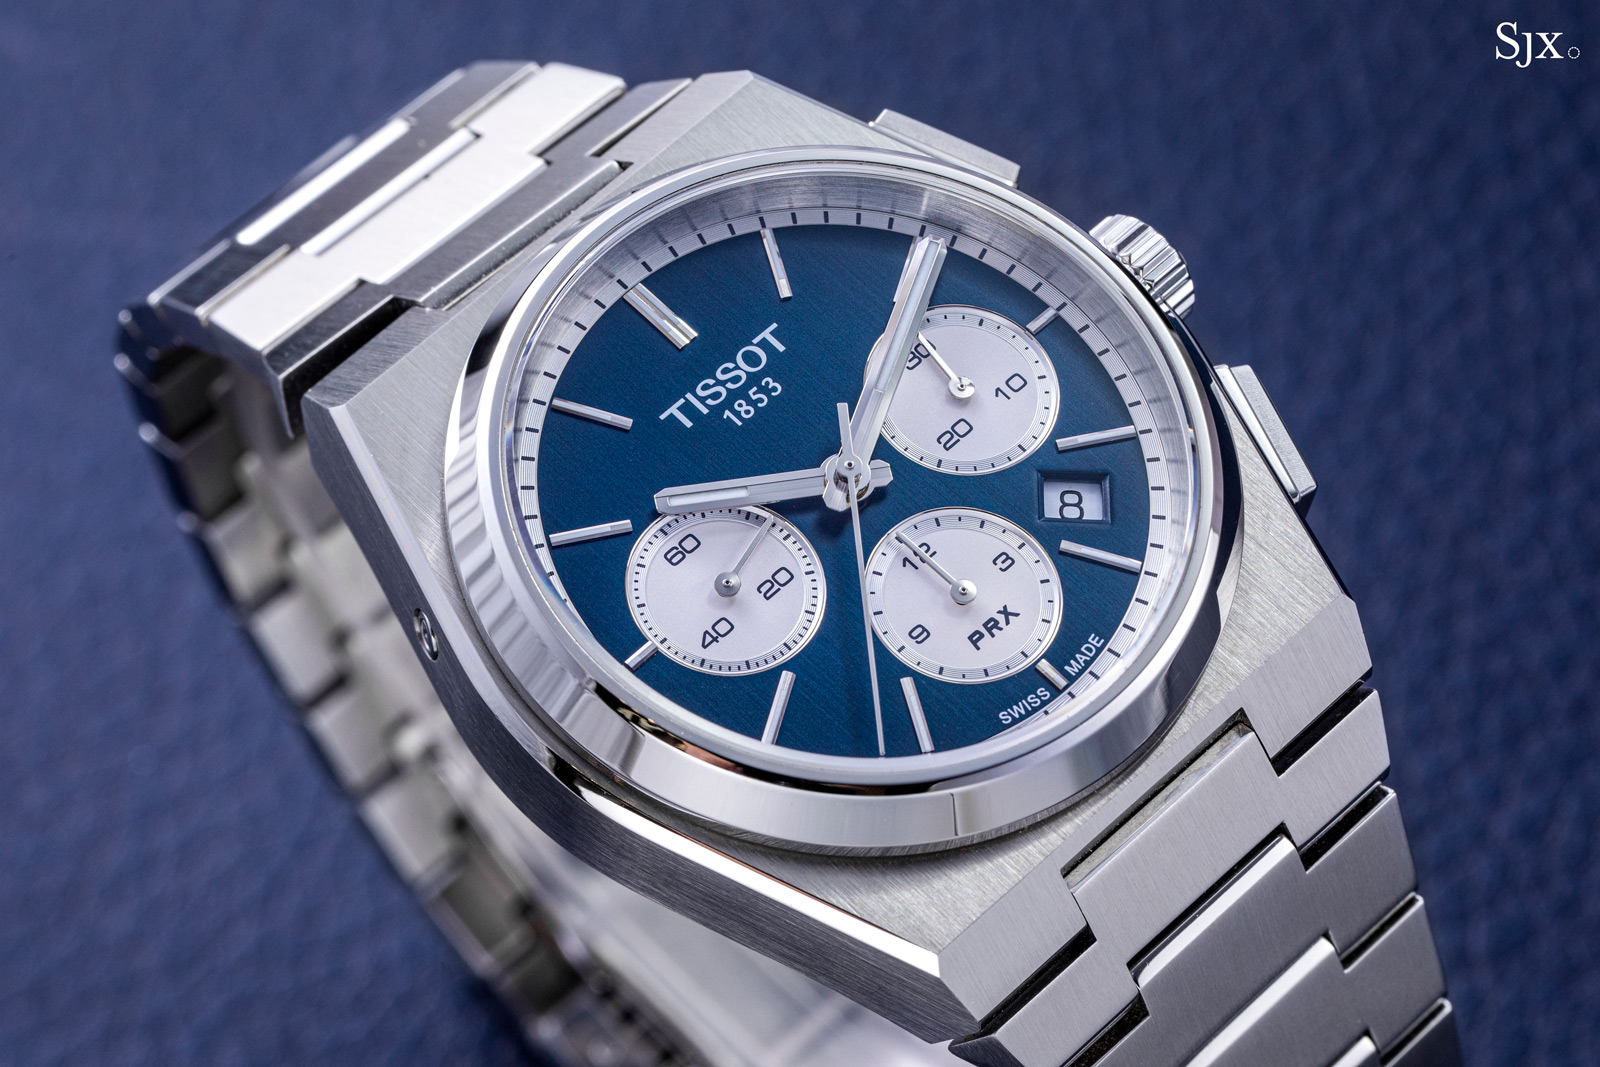 Hands On: Tissot PRX Automatic Chronograph | SJX Watches